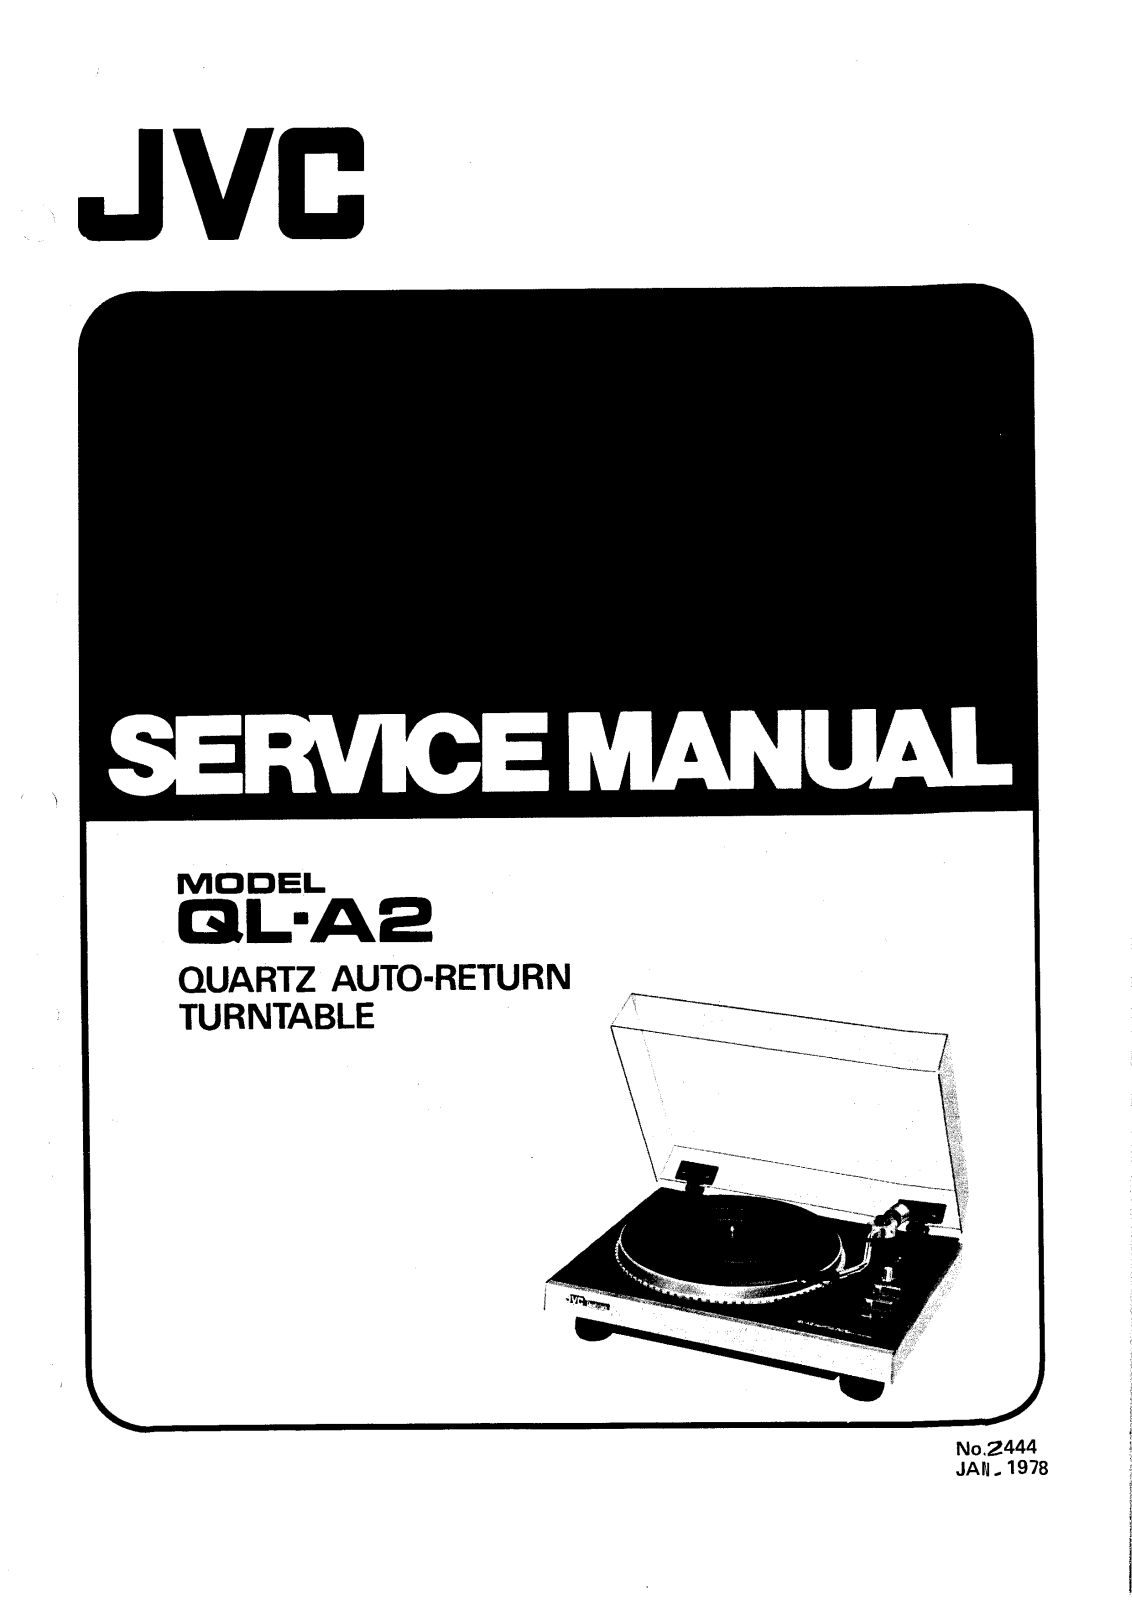 JVC QLA-2 Service manual